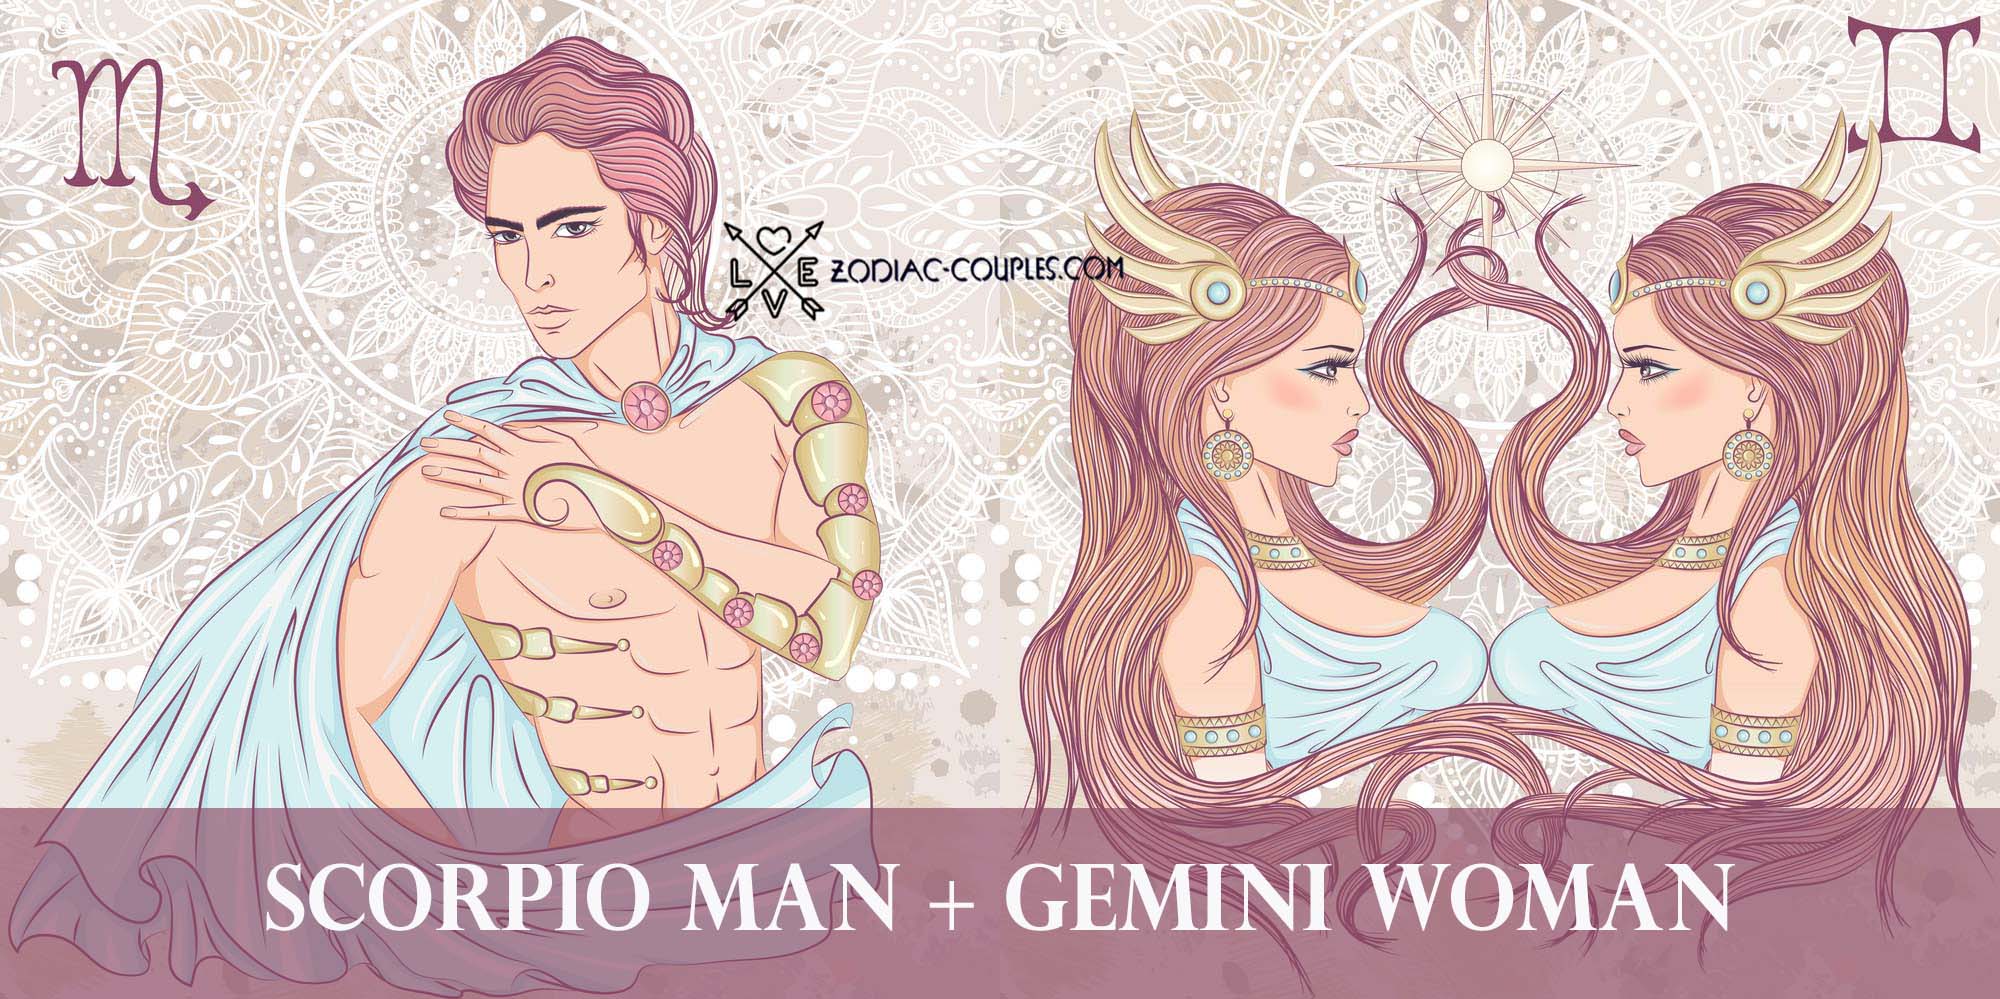 Are gemini girl and scorpio boy a good couple?